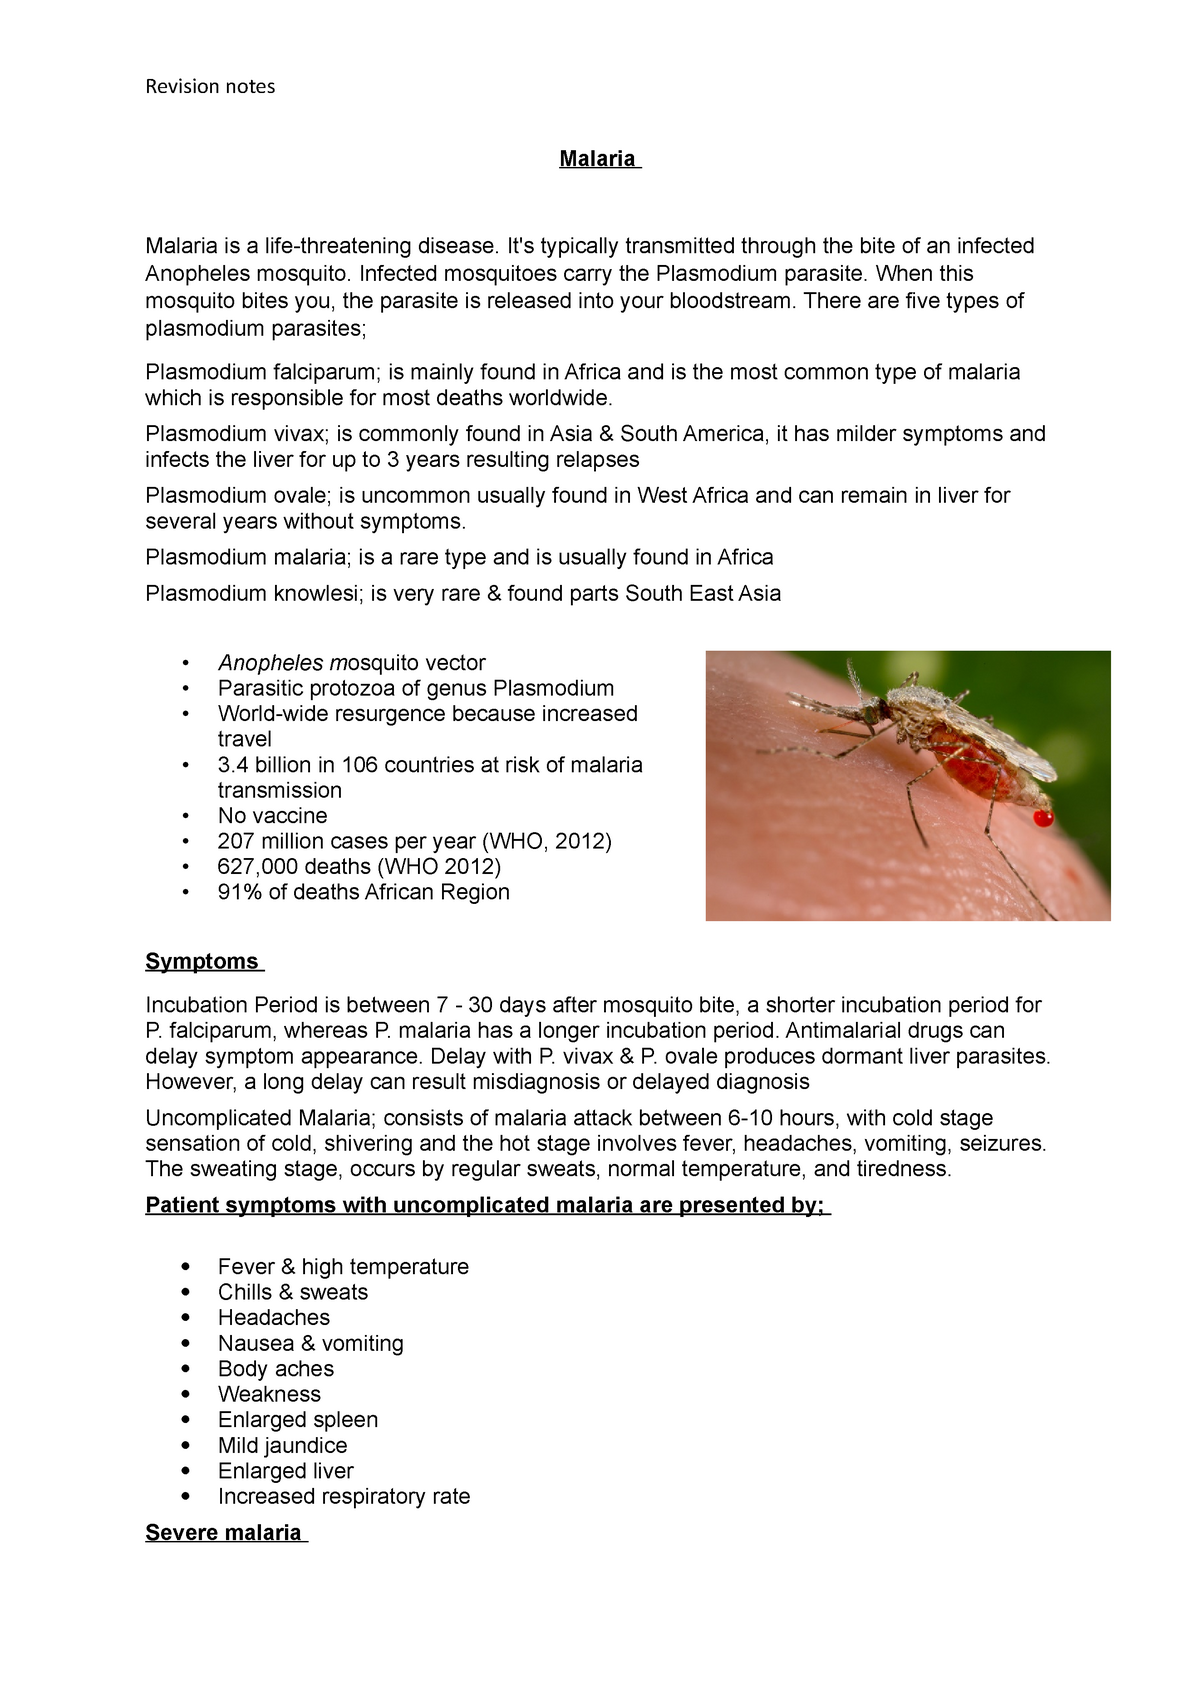 recent literature review on malaria parasite